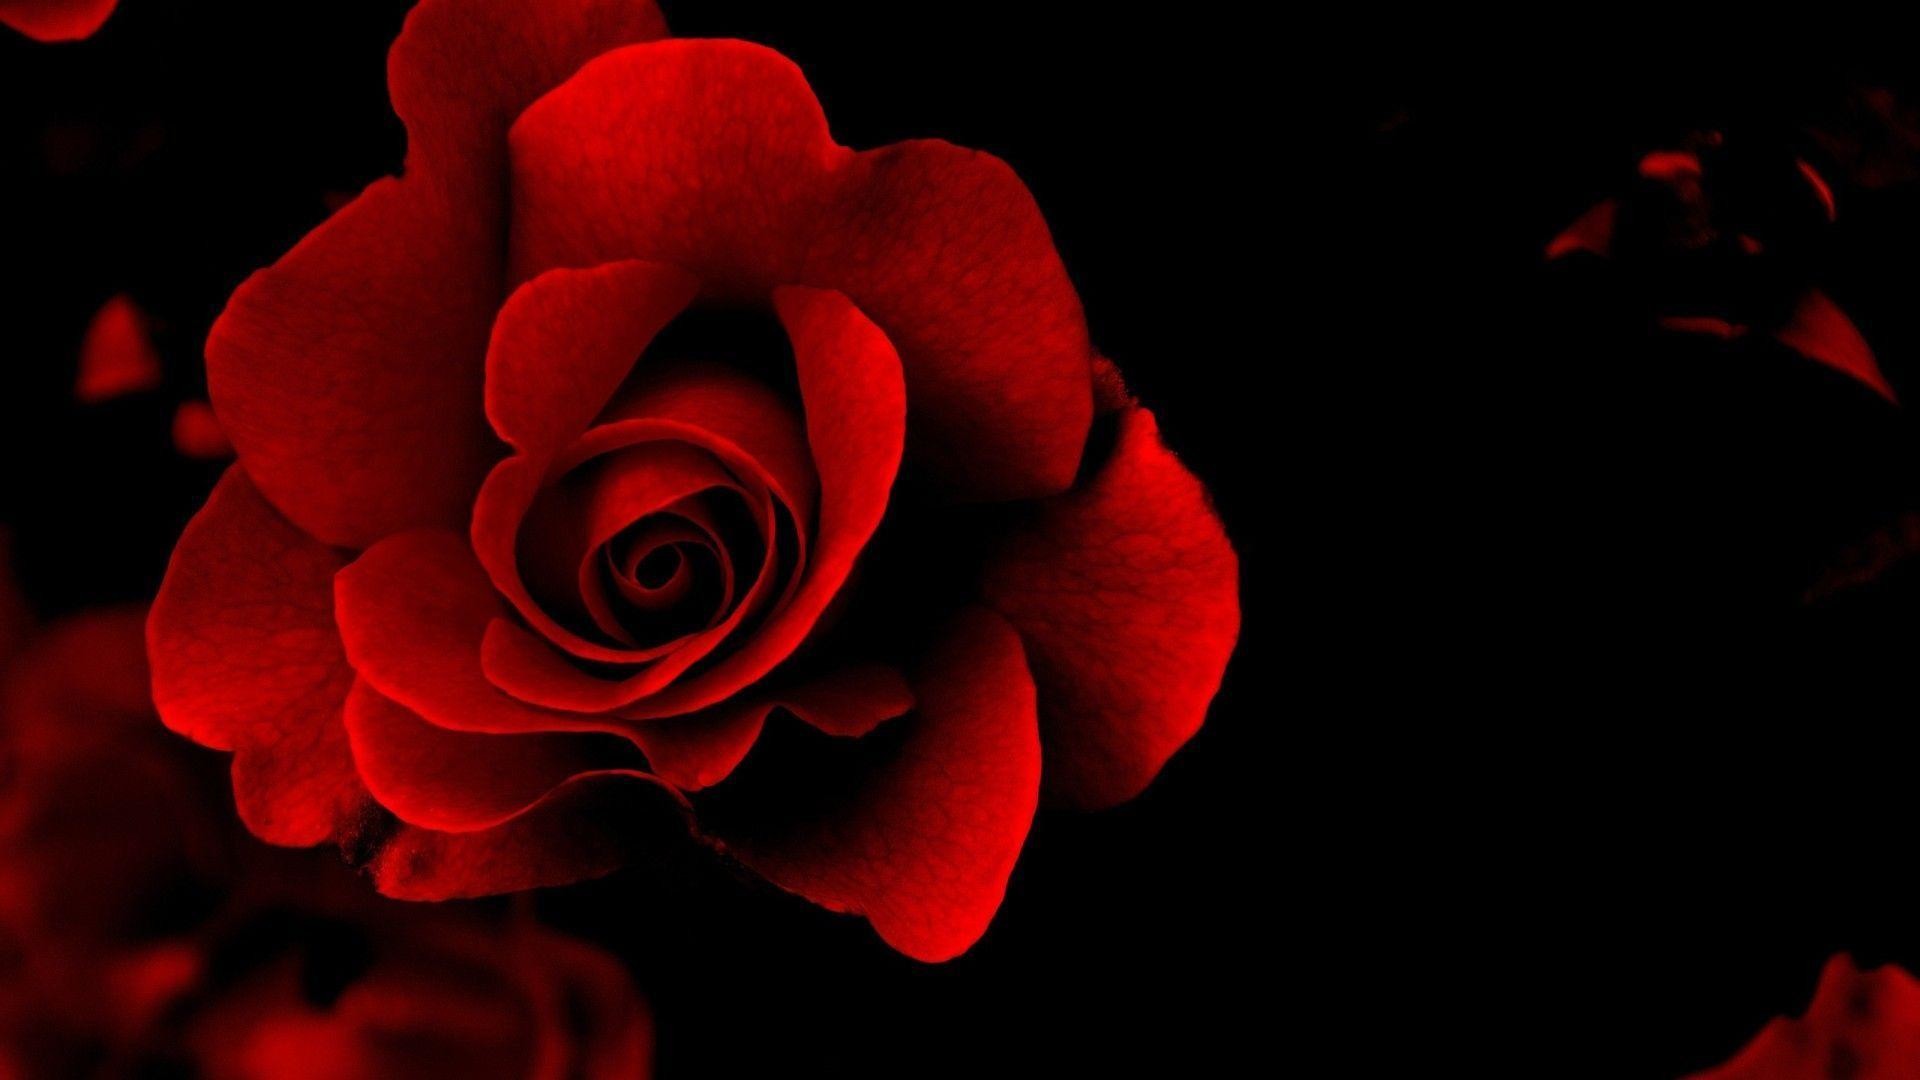 1920x1080 Red Rose Flower Black Backround, iPhone Wallpaper, Facebook Cover .